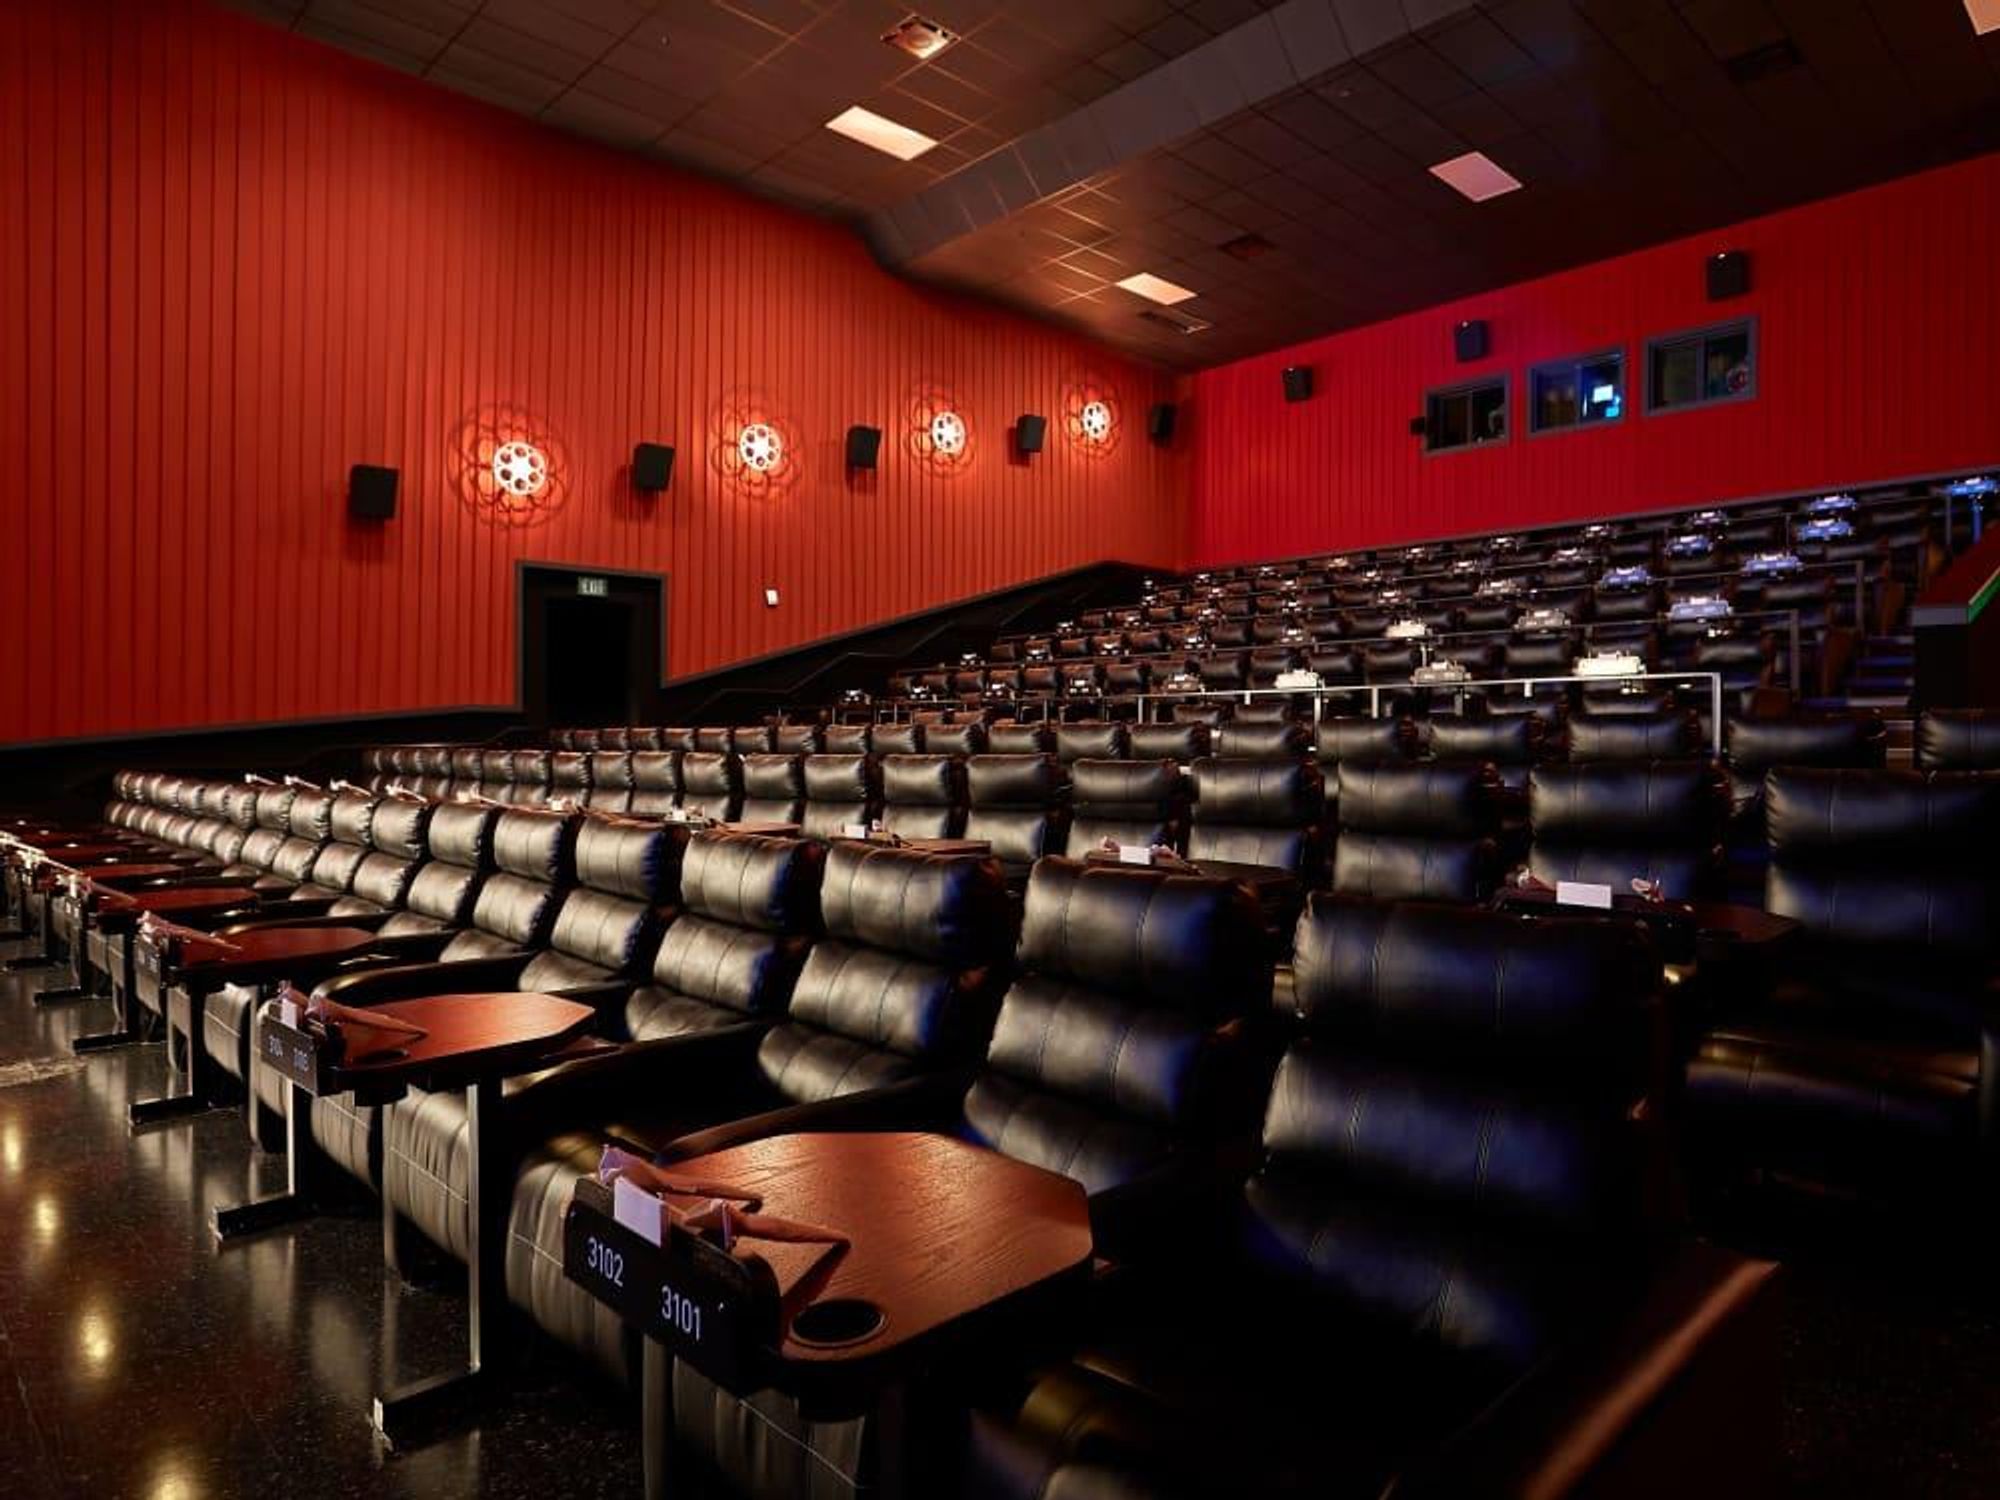 Houston, Alamo Drafthouse Cinema Katy, Jan 2017, interior of auditorium